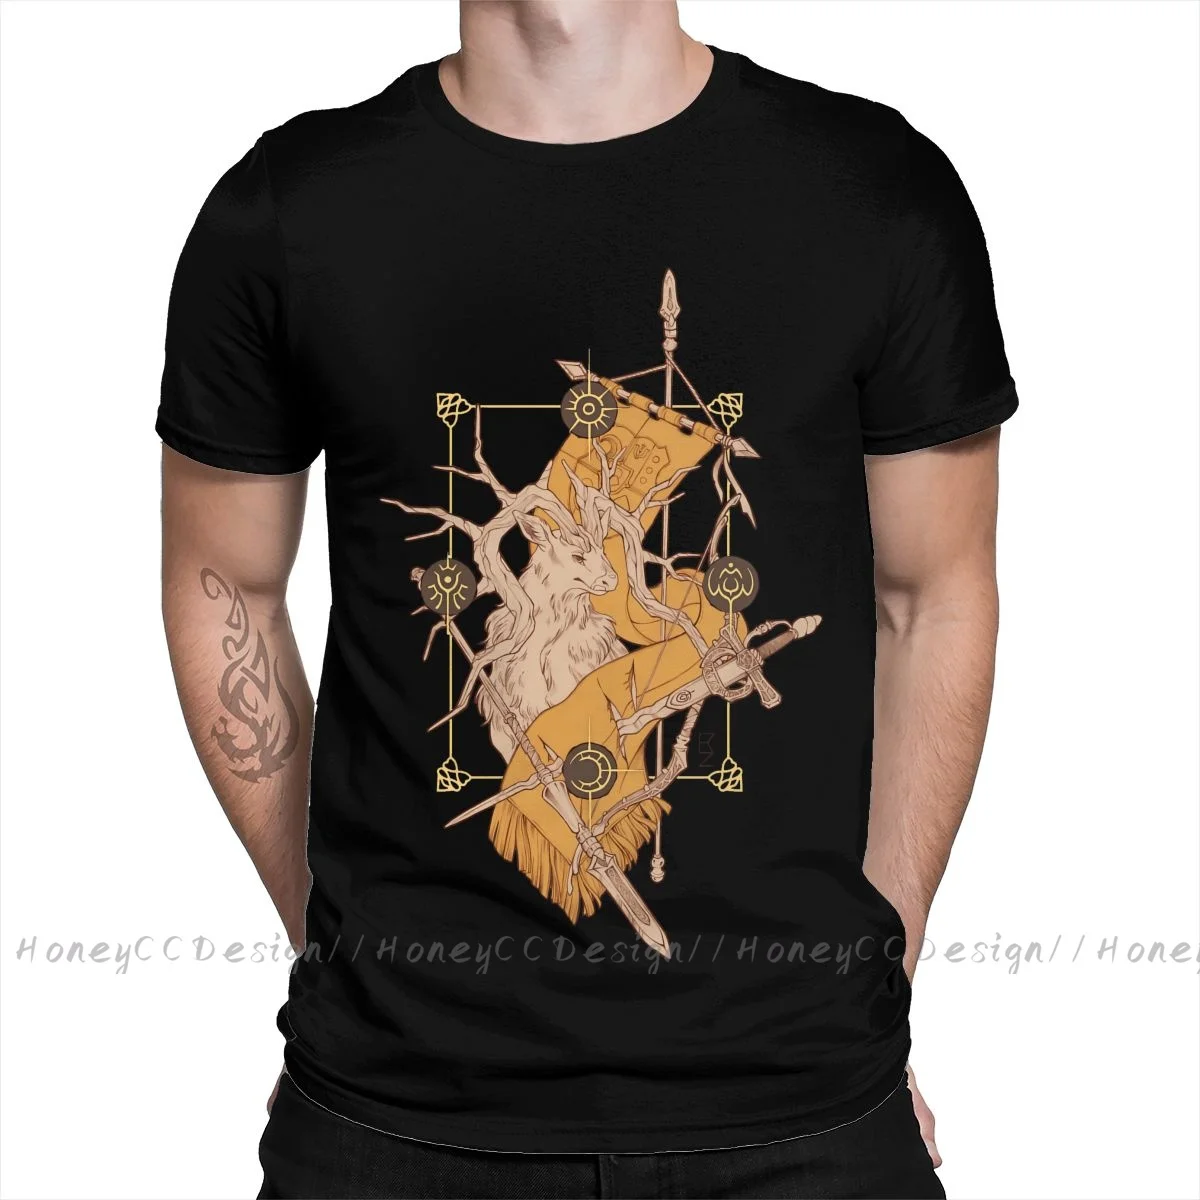 

Fire Emblem Print Cotton T-Shirt Camiseta Hombre Tribute To The Golden Deer For Men Fashion Streetwear Shirt Gift